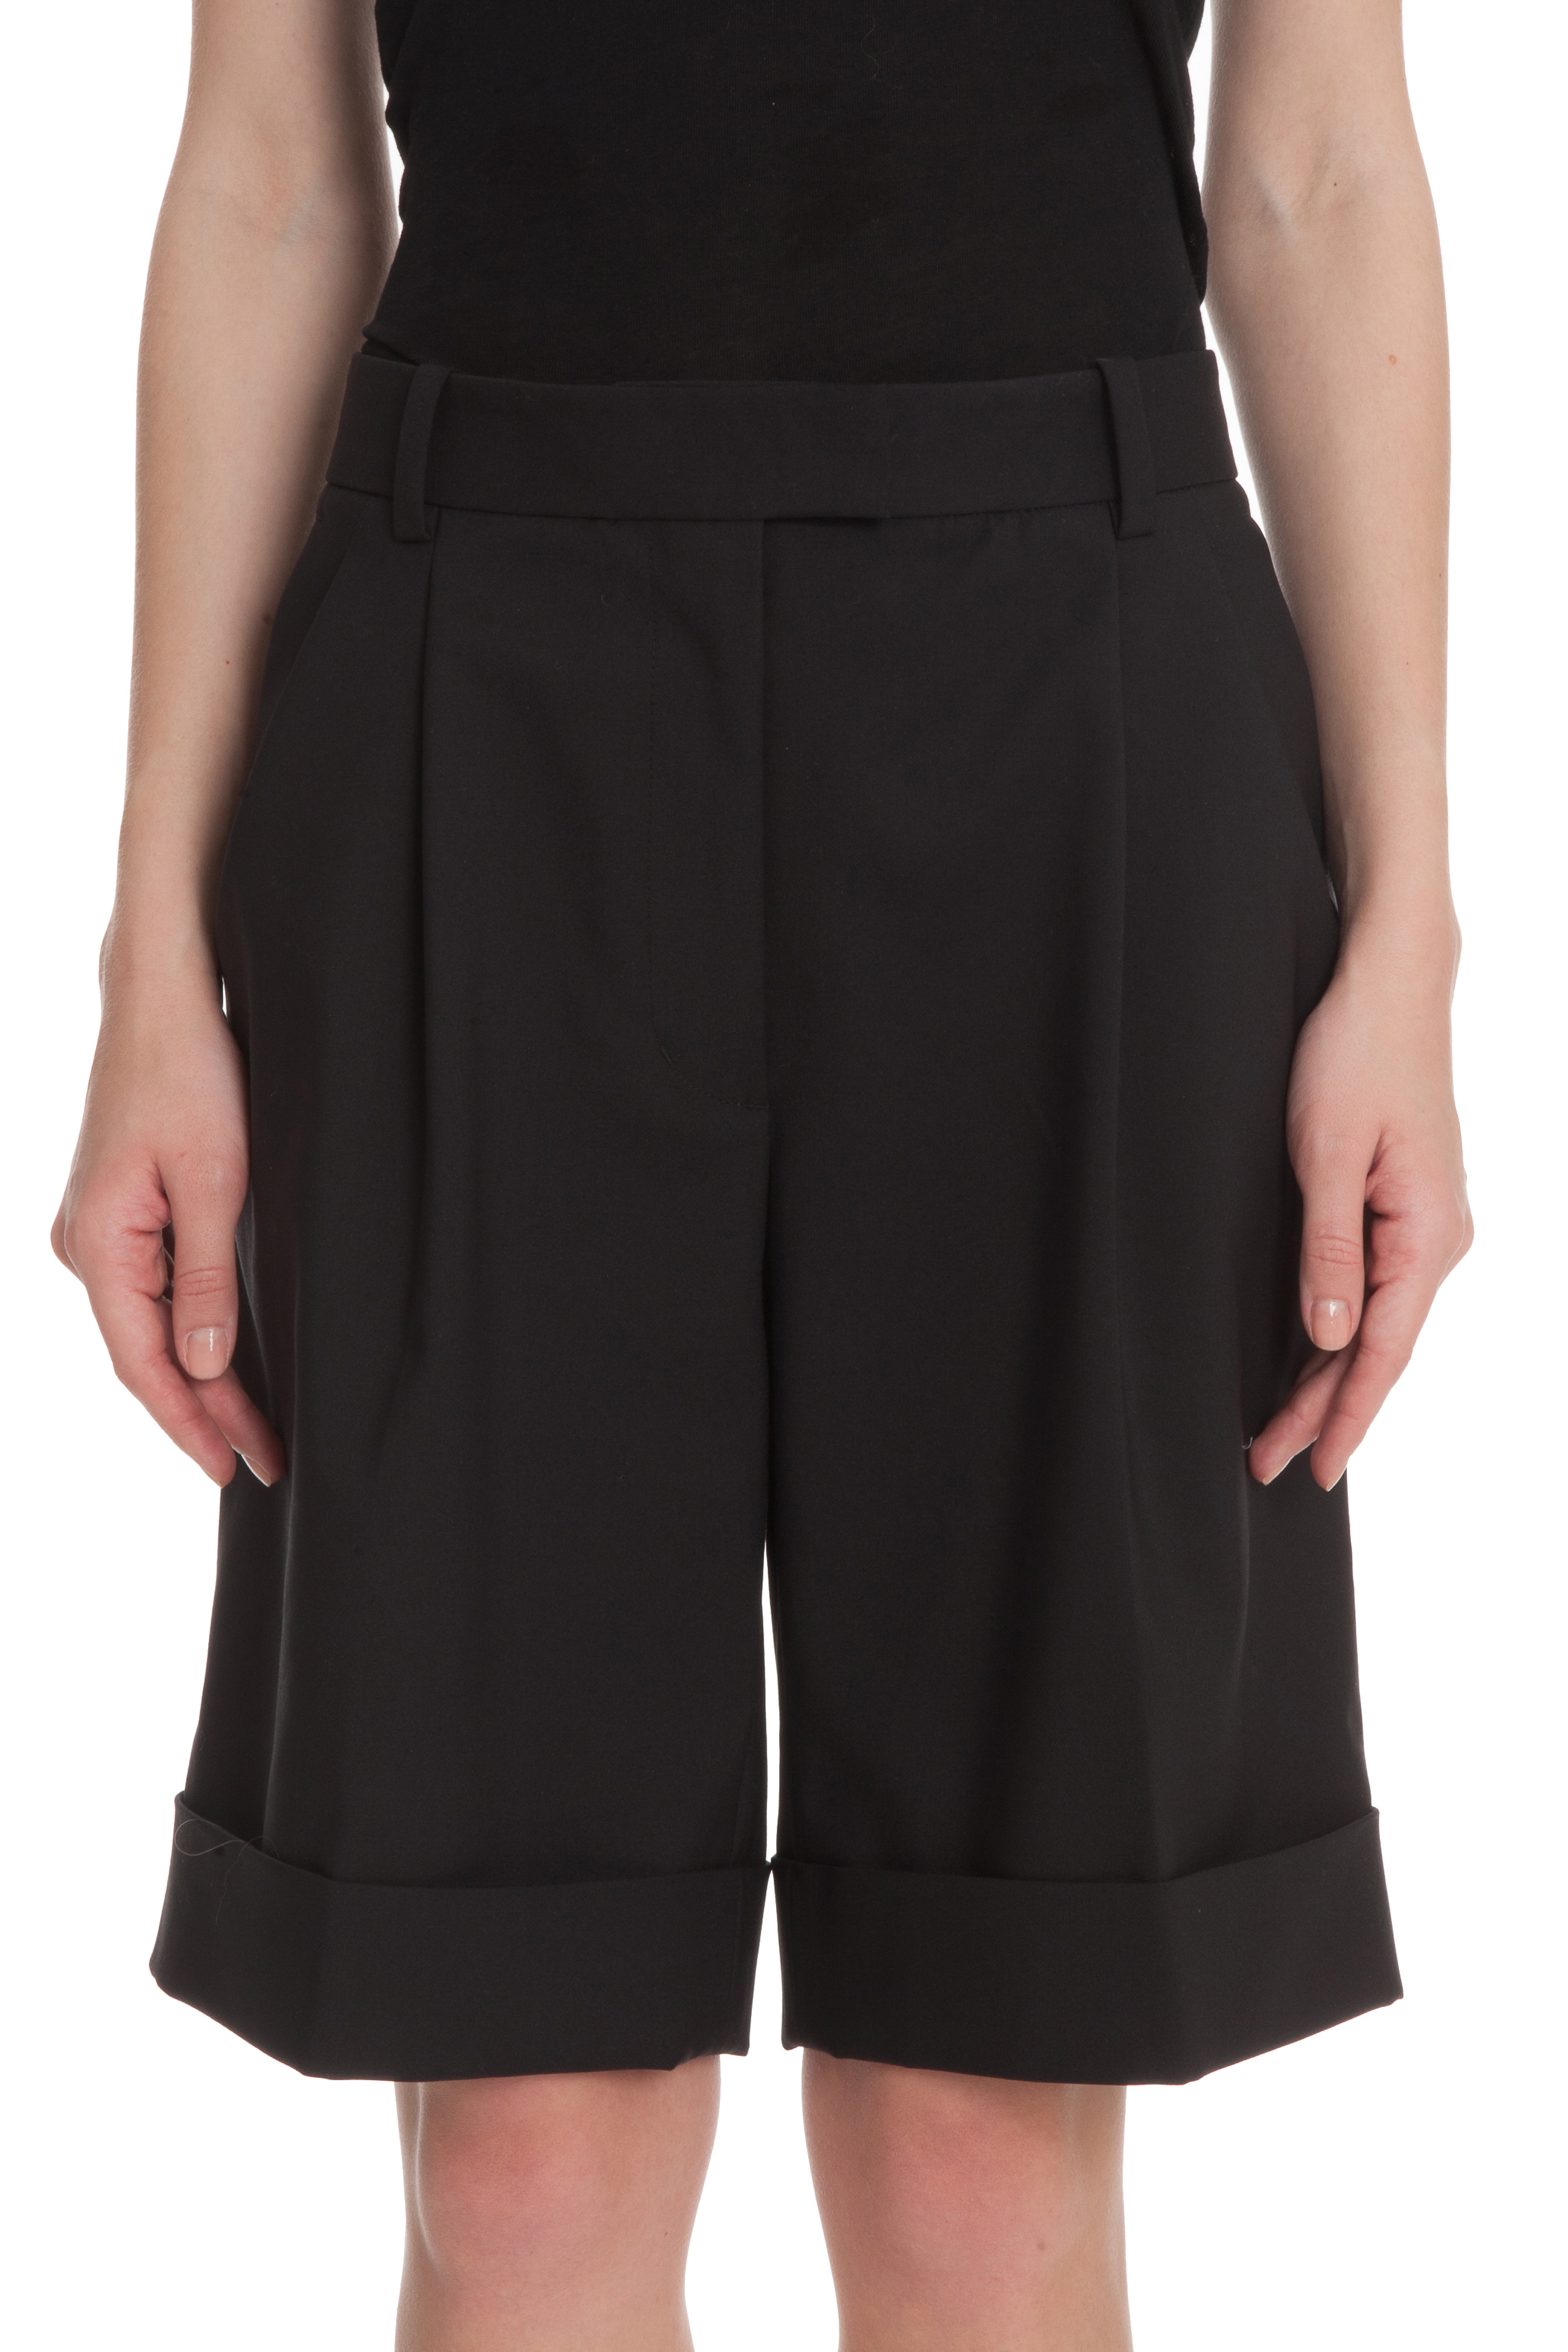 Lyst - 3.1 phillip lim Pleated Bermuda Shorts in Black